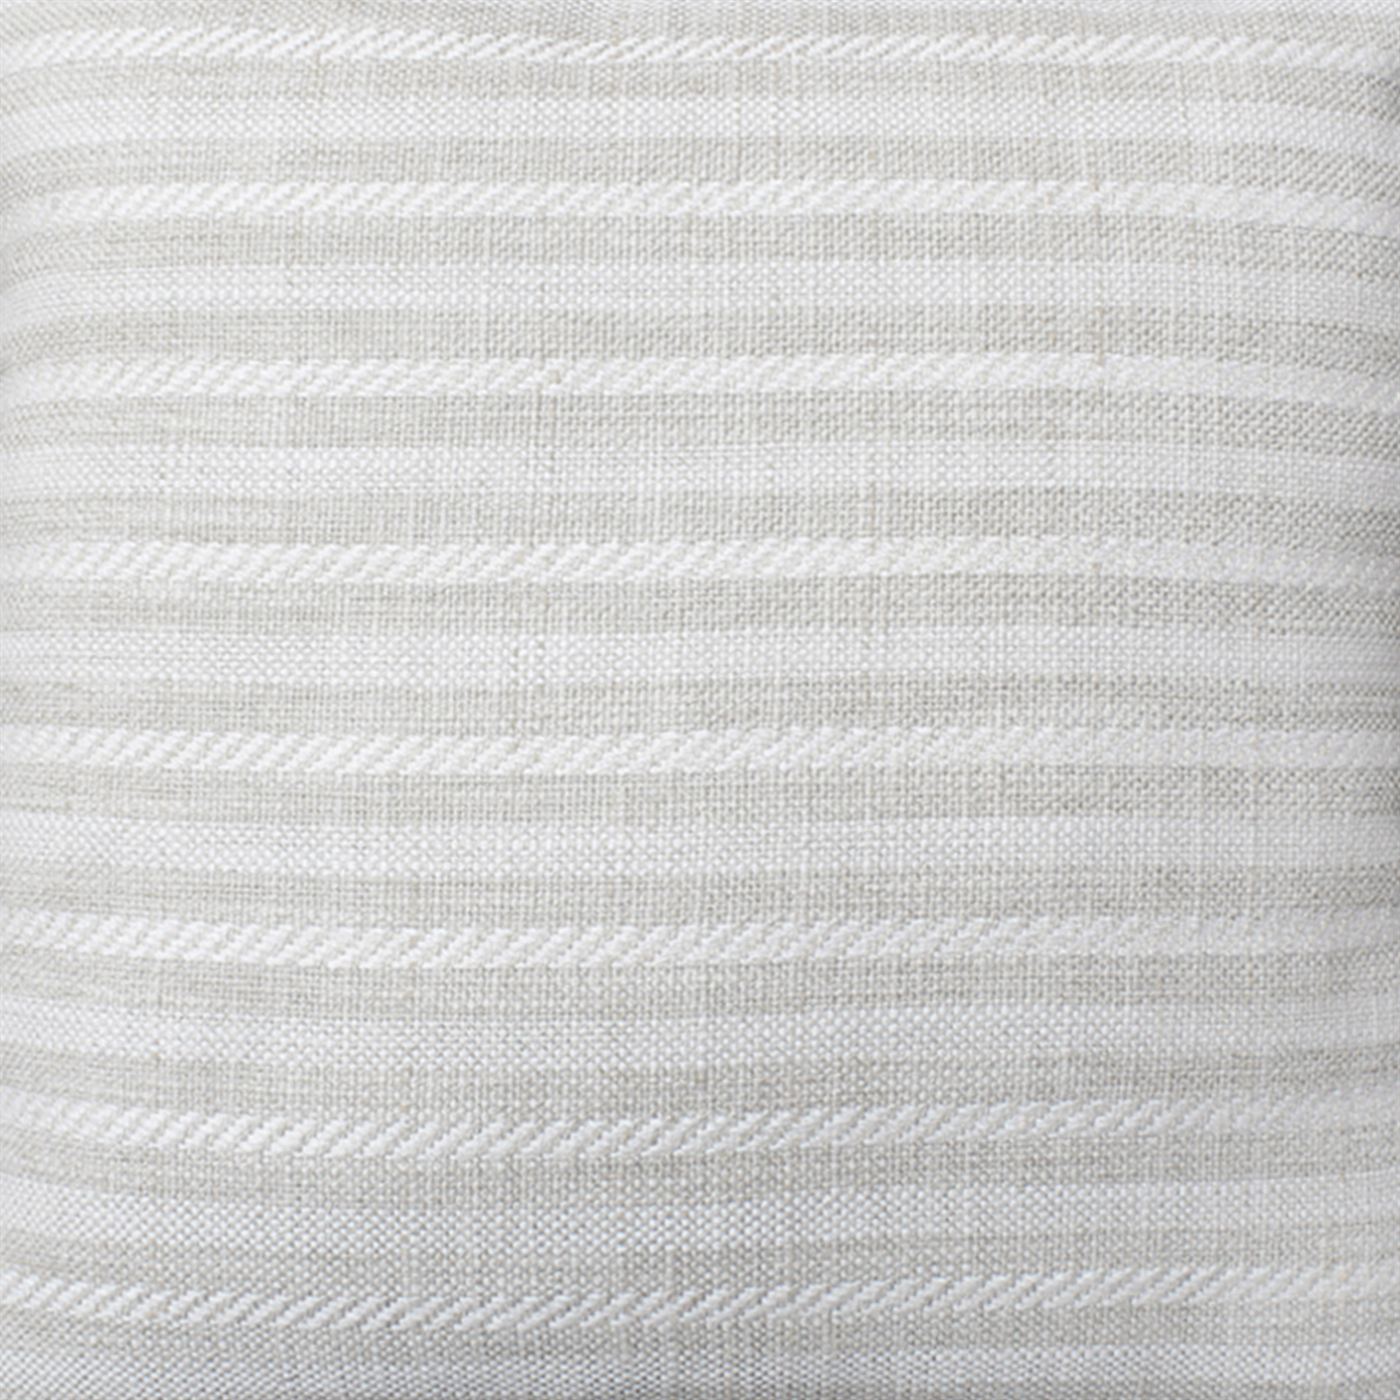 Skata Cushion, Blended Fabric, Beige, Natural White, Machine Made, Flat Weave